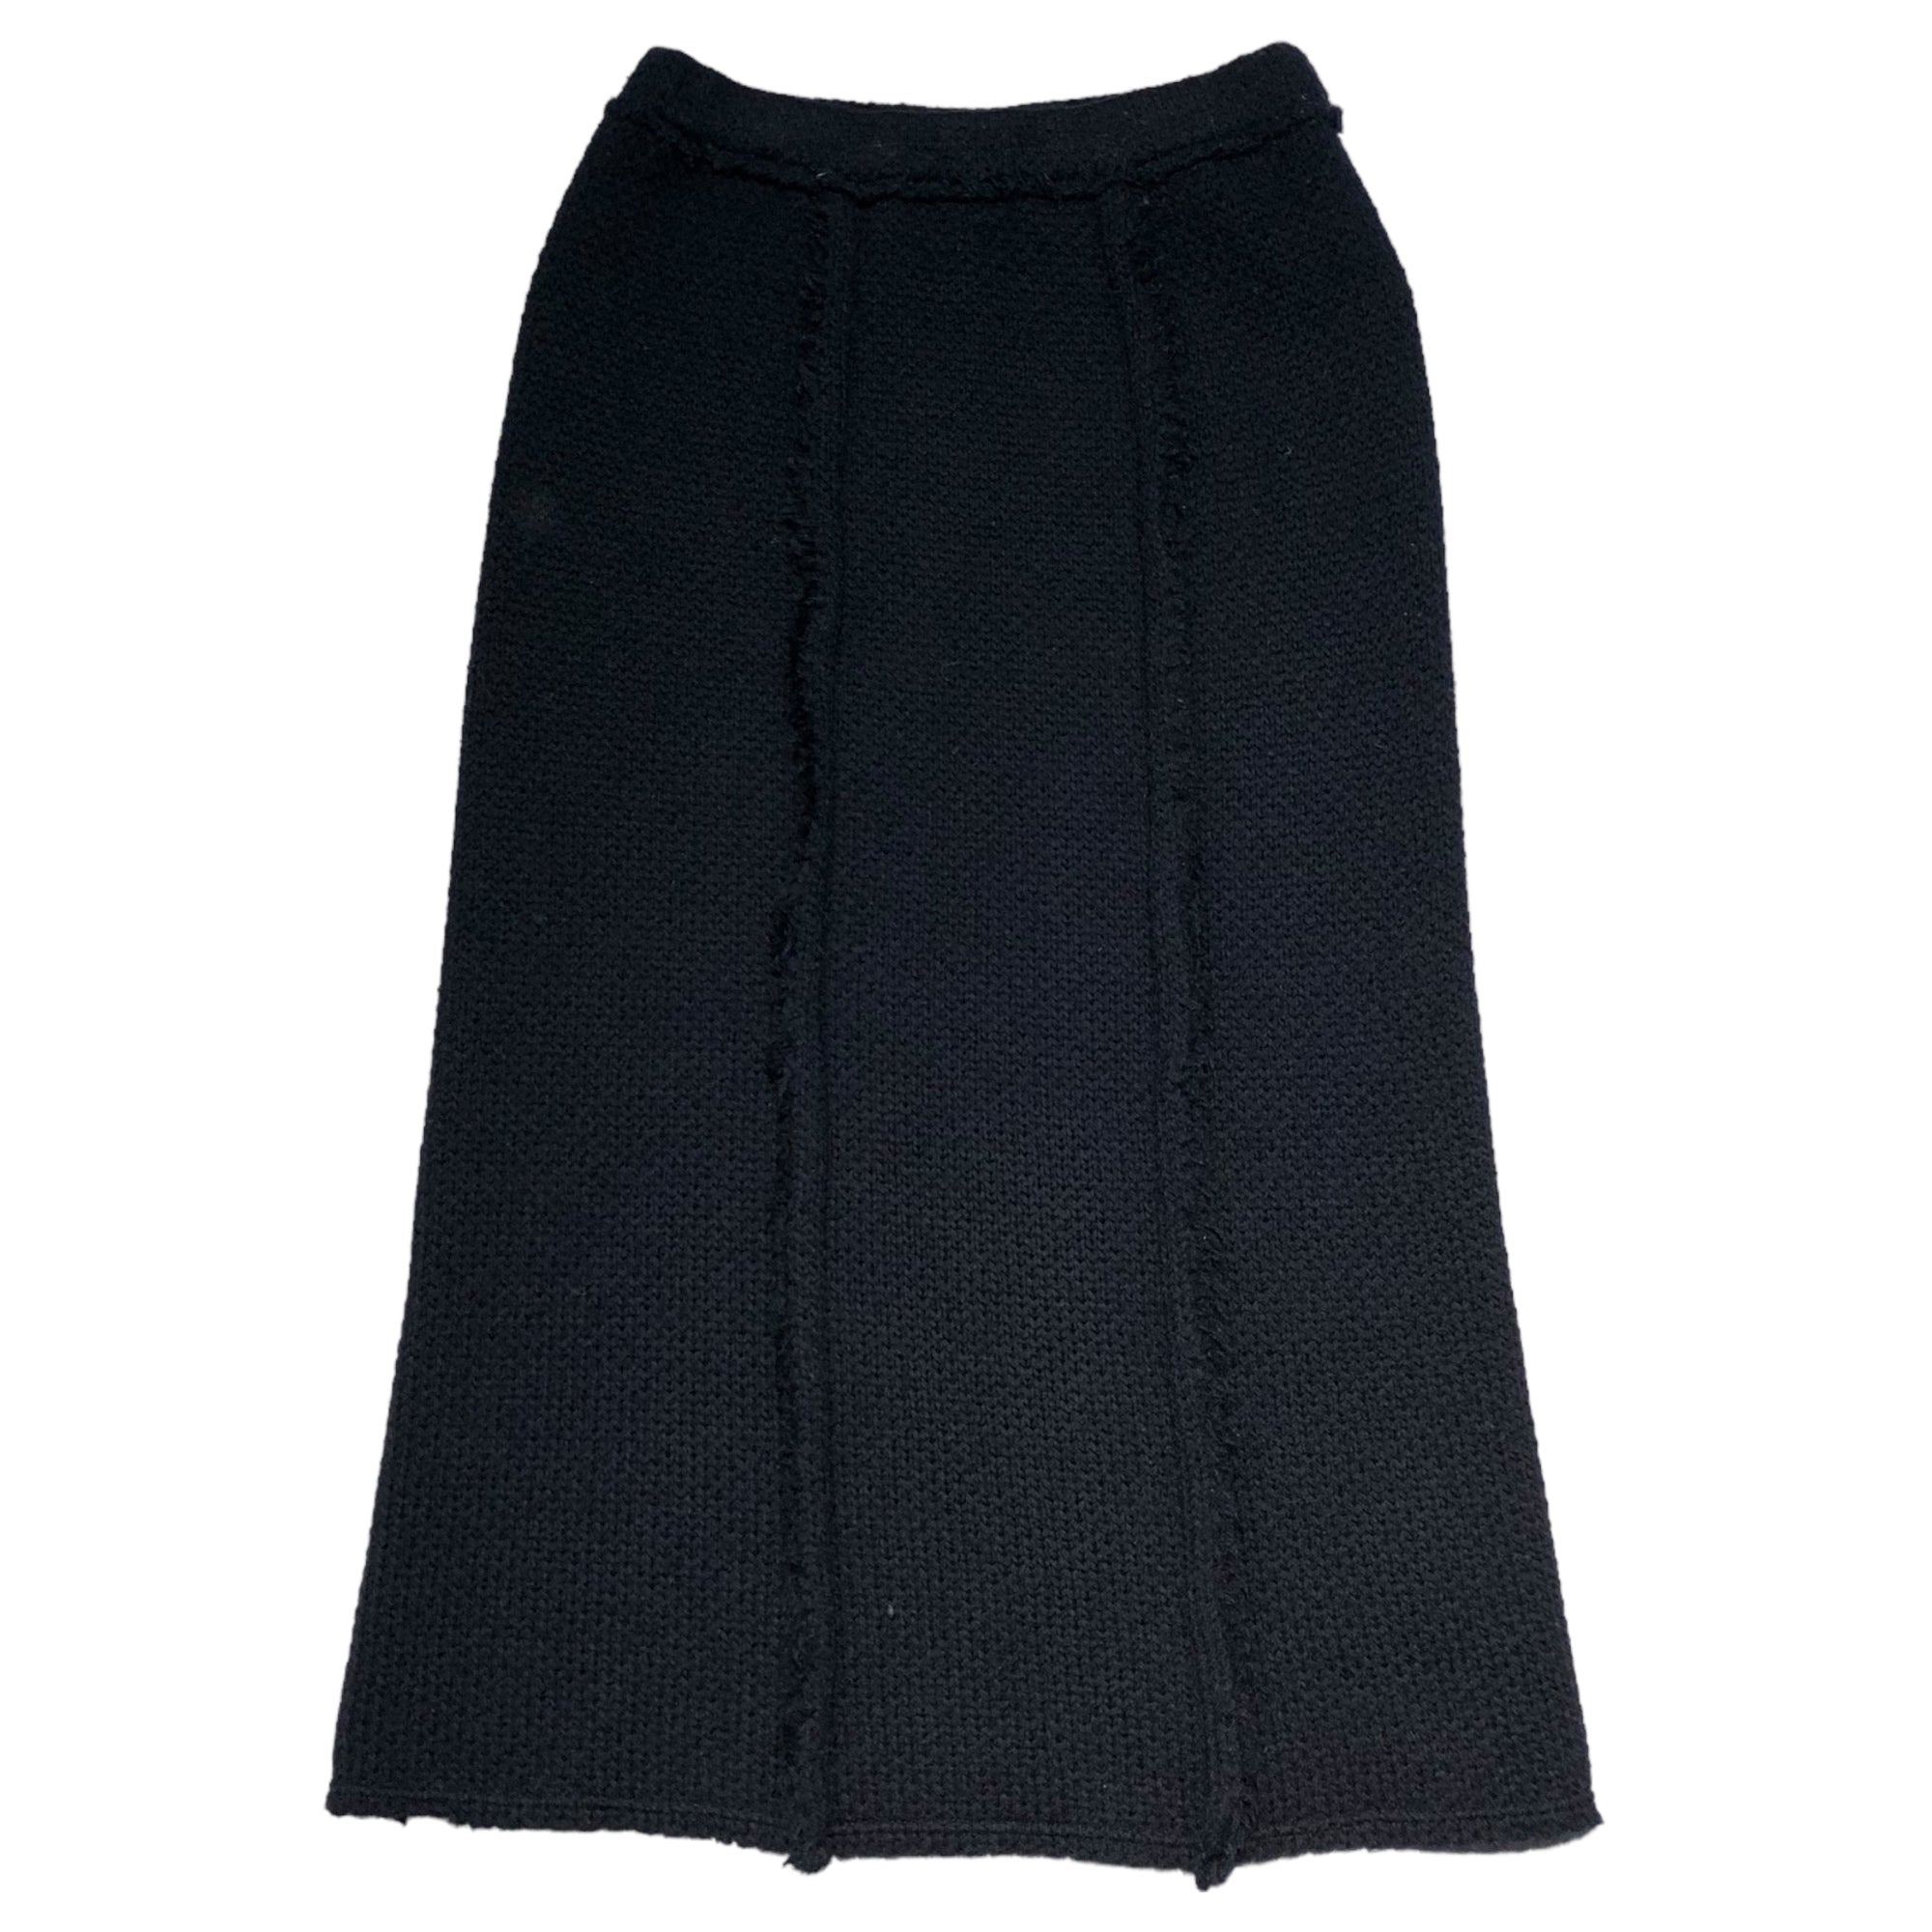 robe de chambre COMME des GARCONS(ローブドシャンブルコムデギャルソン) 02AW wool knit long skirt ウール ニット ロング スカート RG-S025 M ダークネイビー